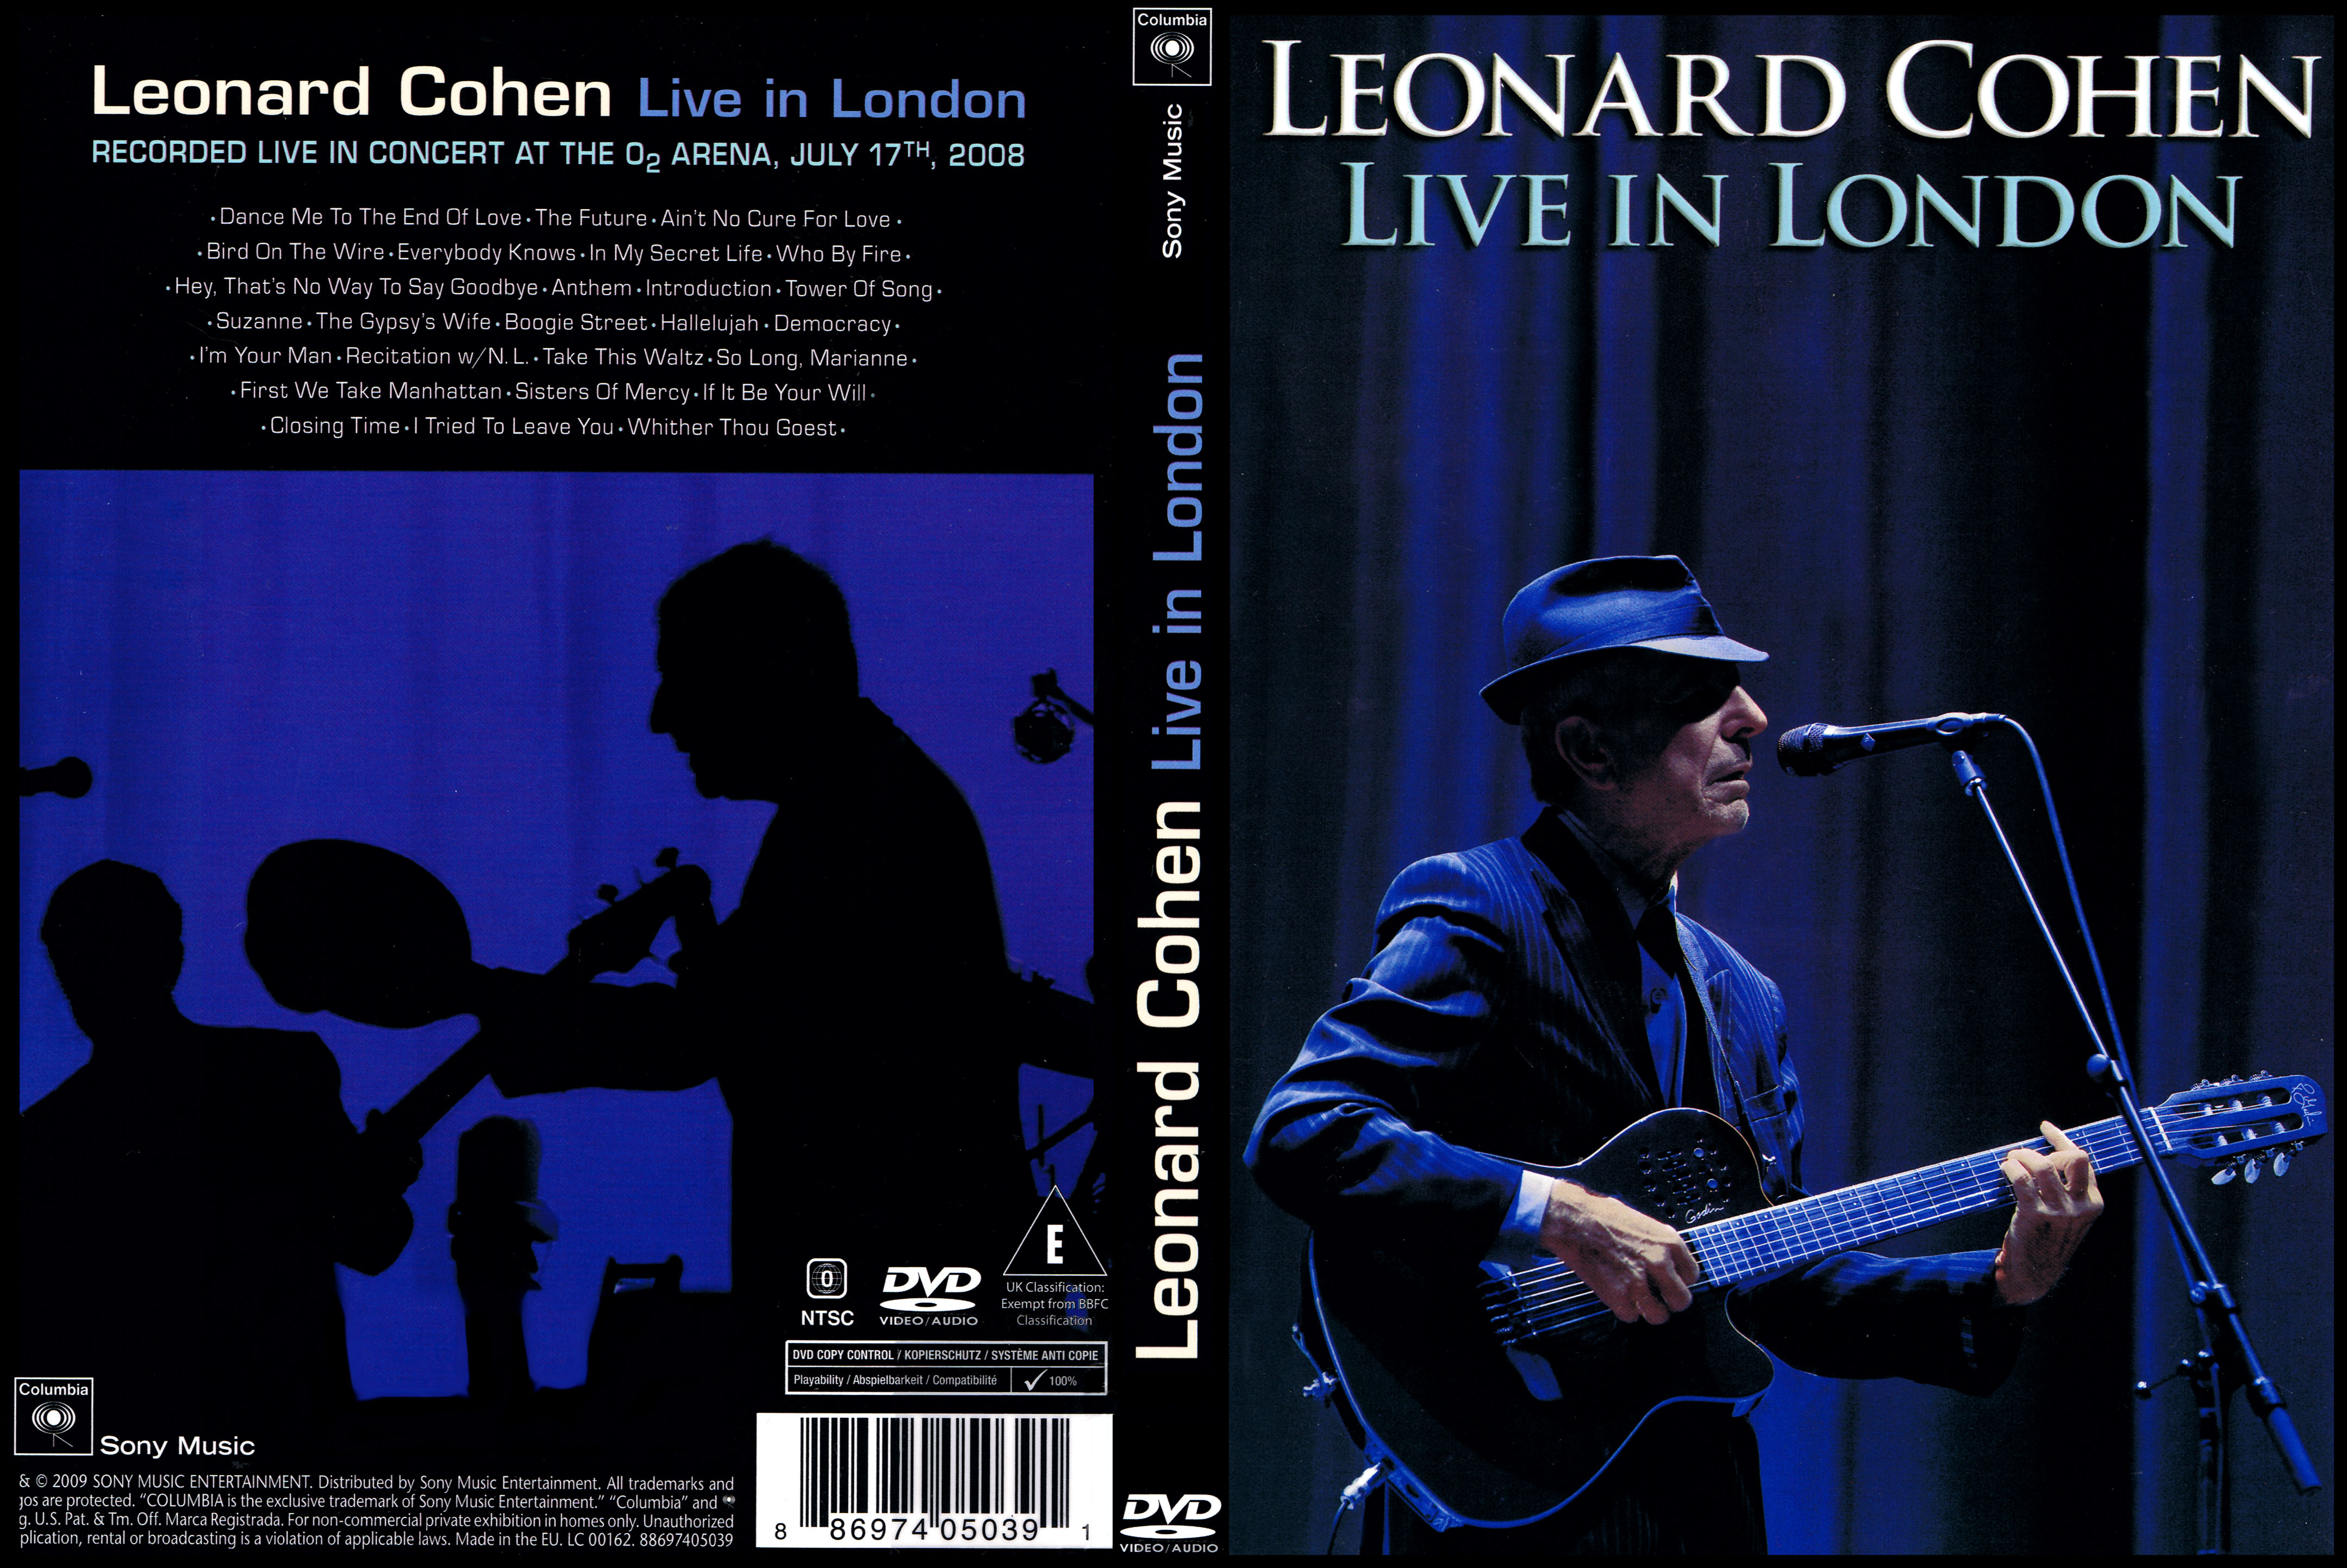 Jaquette DVD Leonard Cohen - Live in London